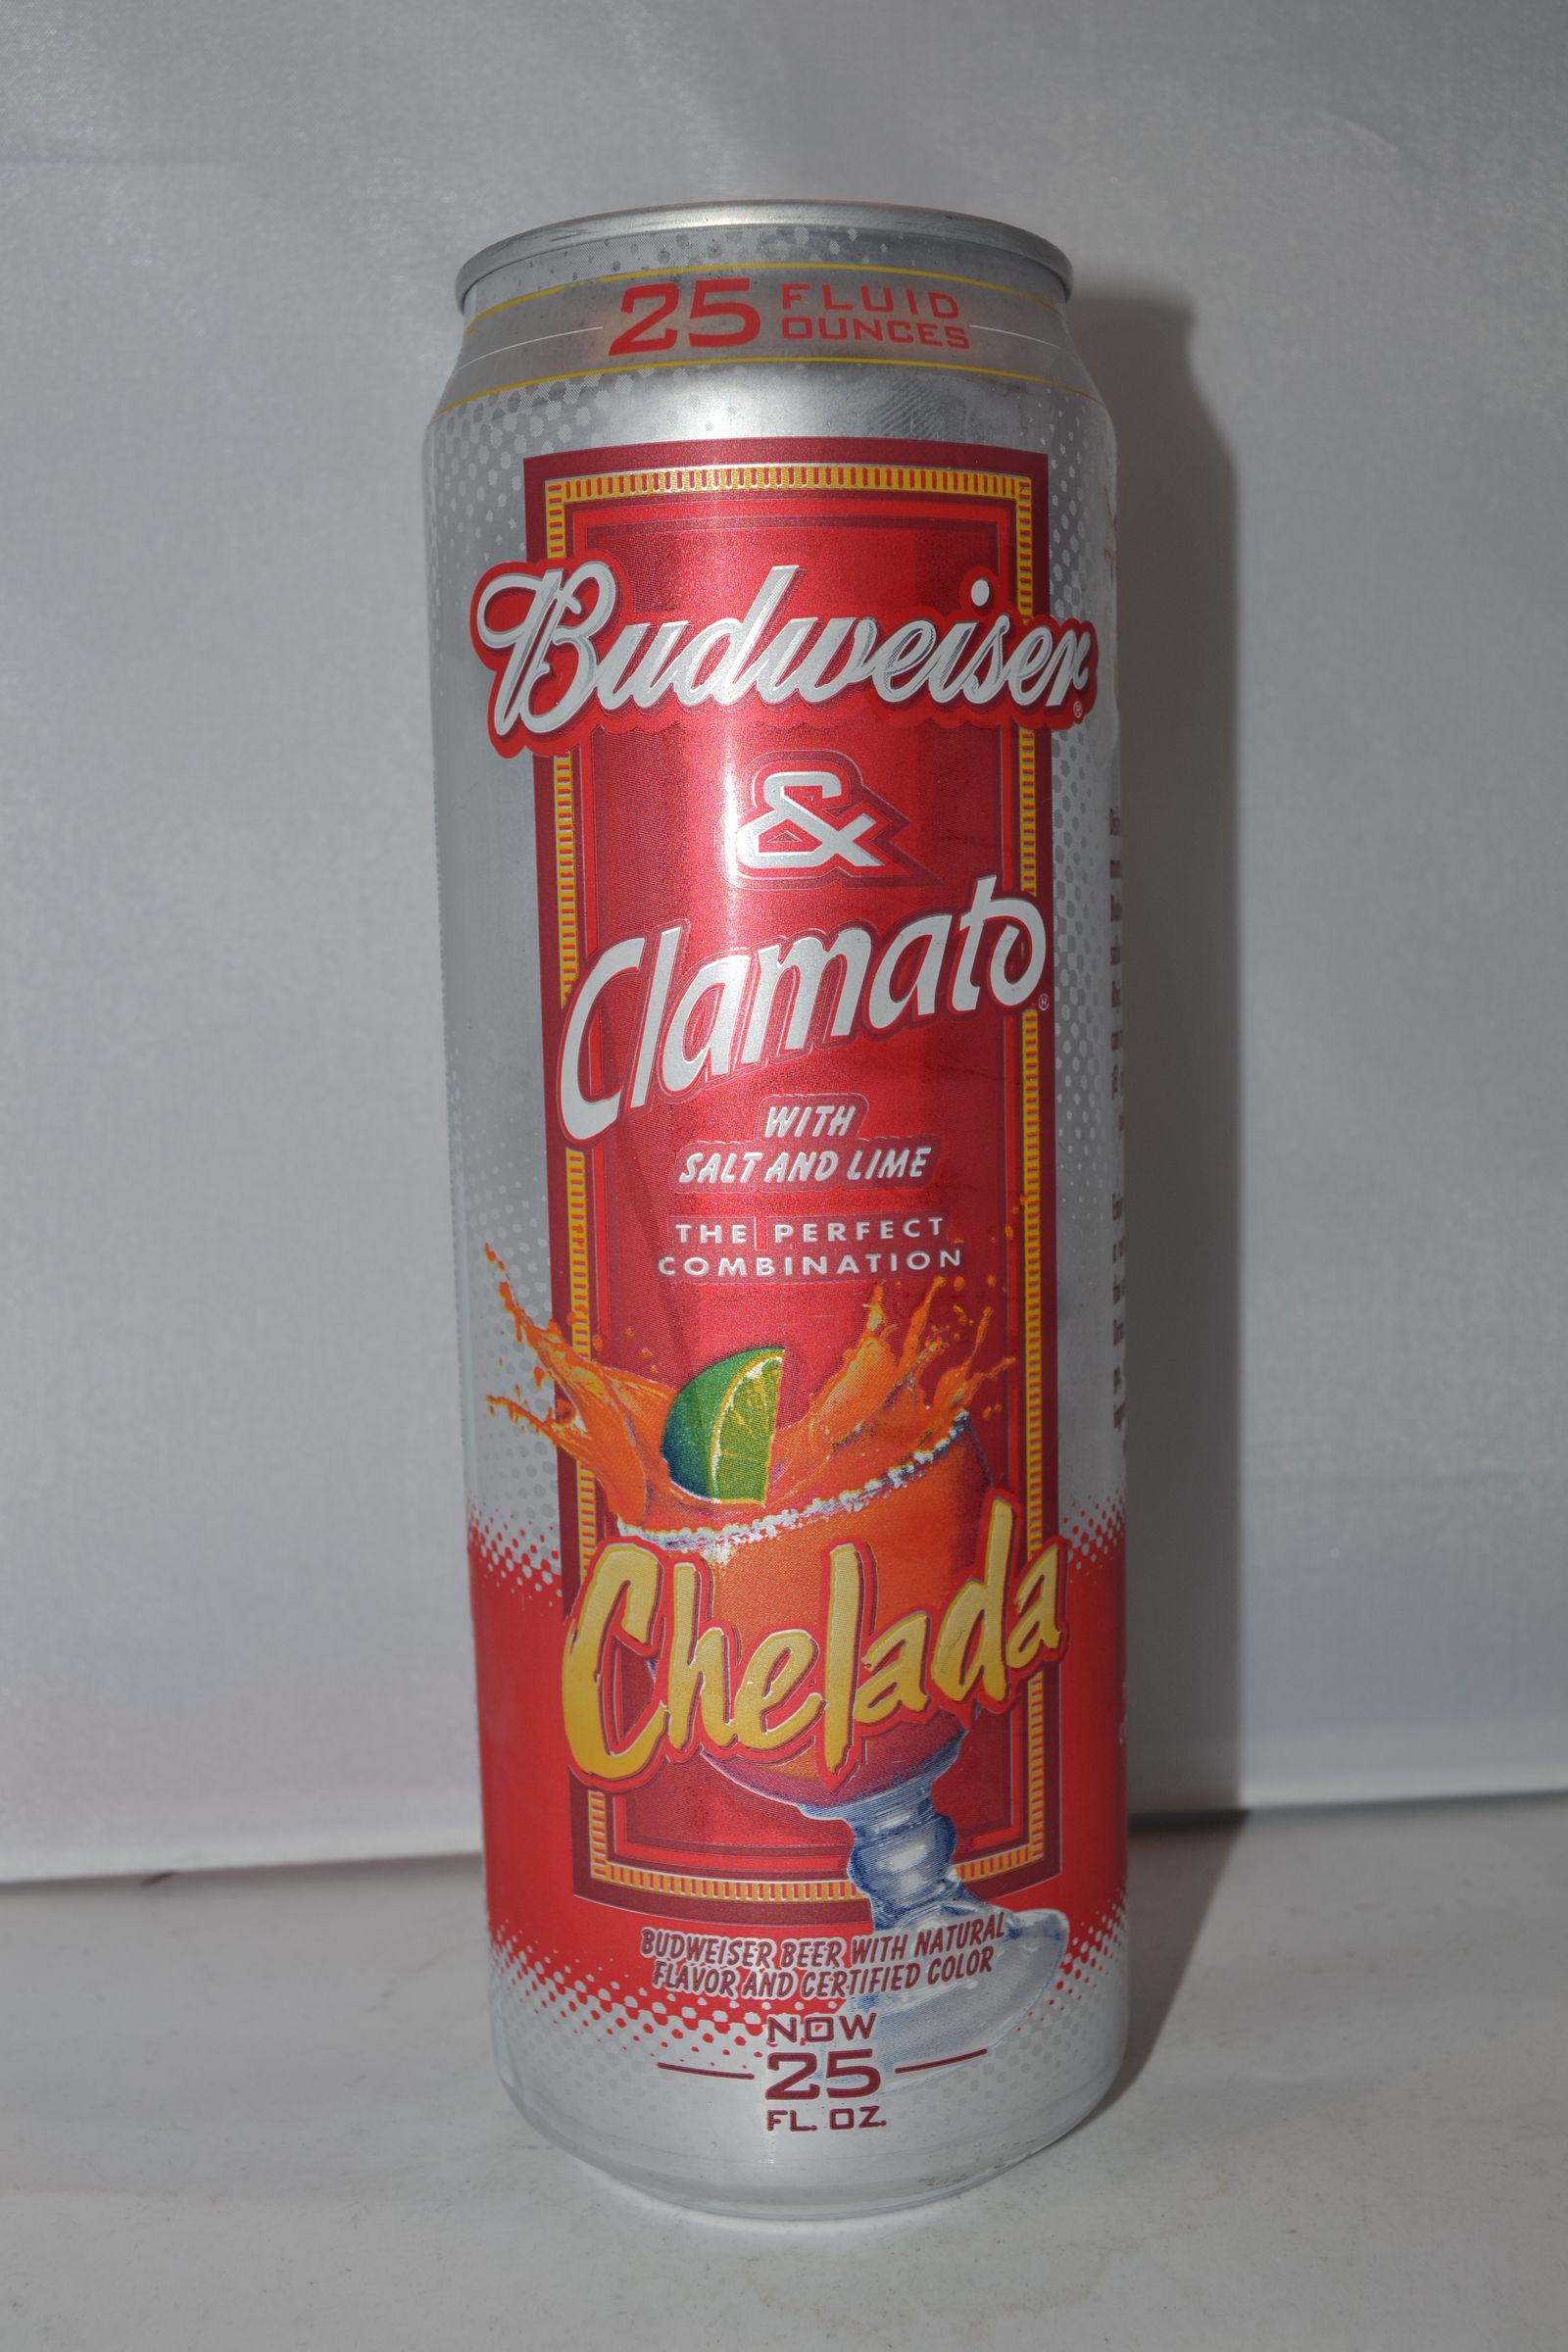 BUDWEISER CLAMATO CHELADA 25OZ CAN - Remedy Liquor